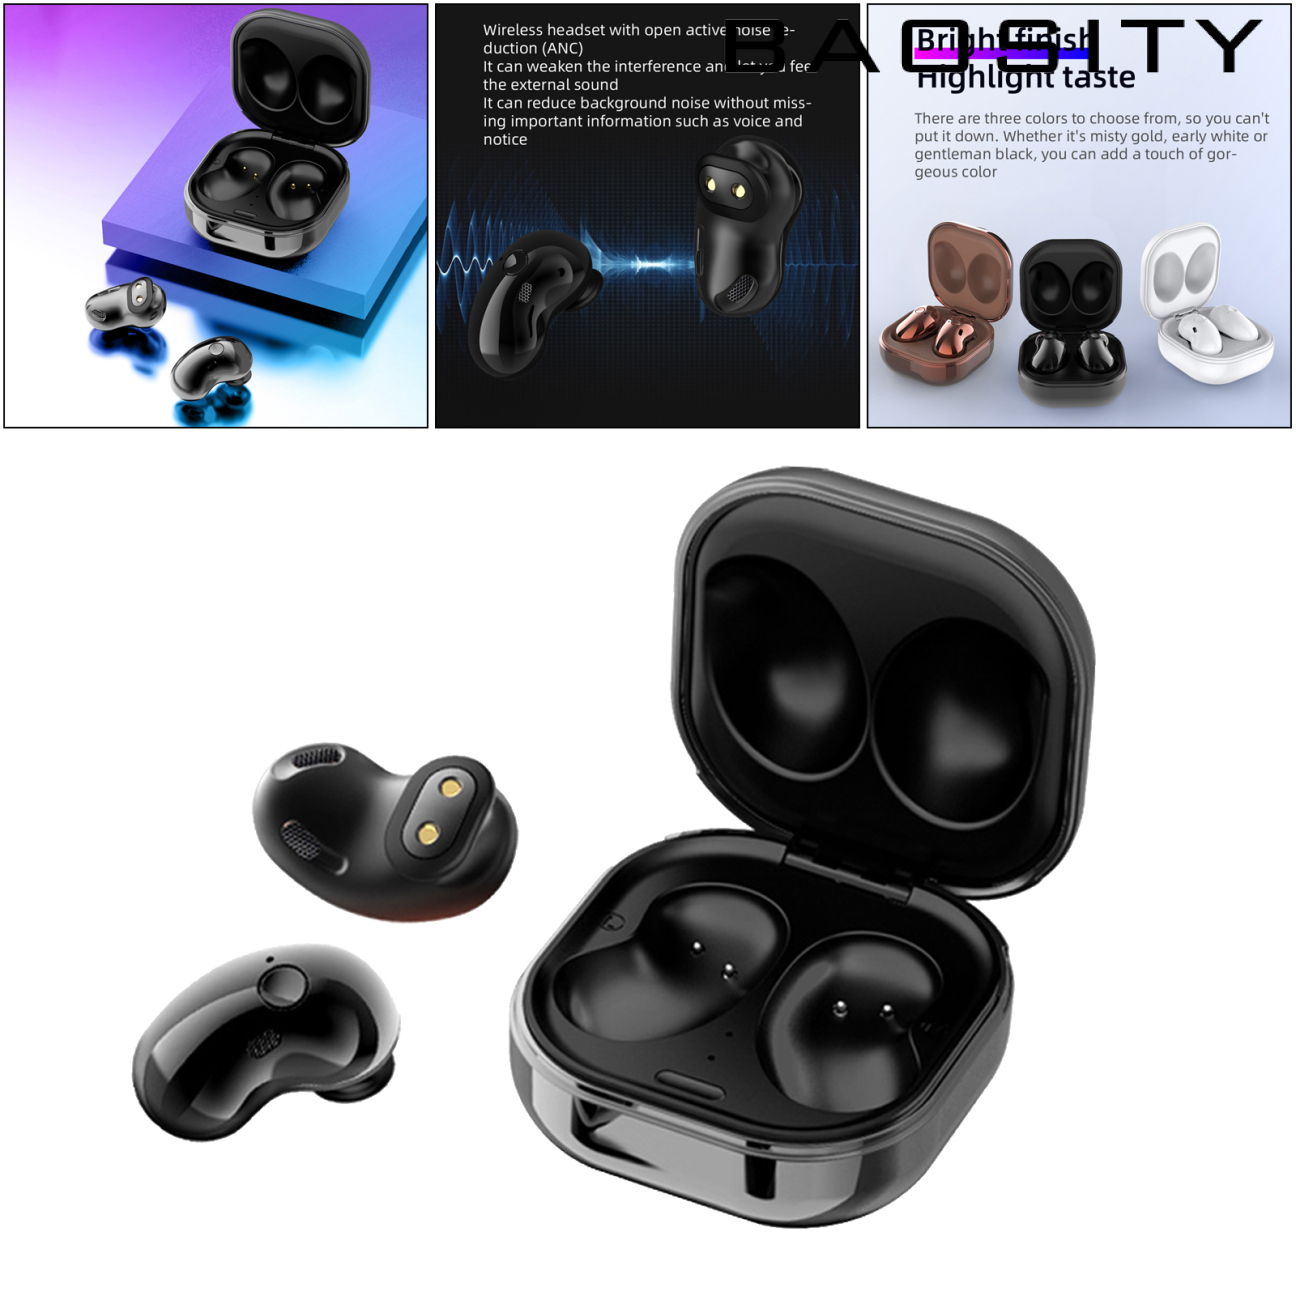 [BAOSITY]S6 TWS Bluetooth Earphones Wireless Headphone Binaural Call